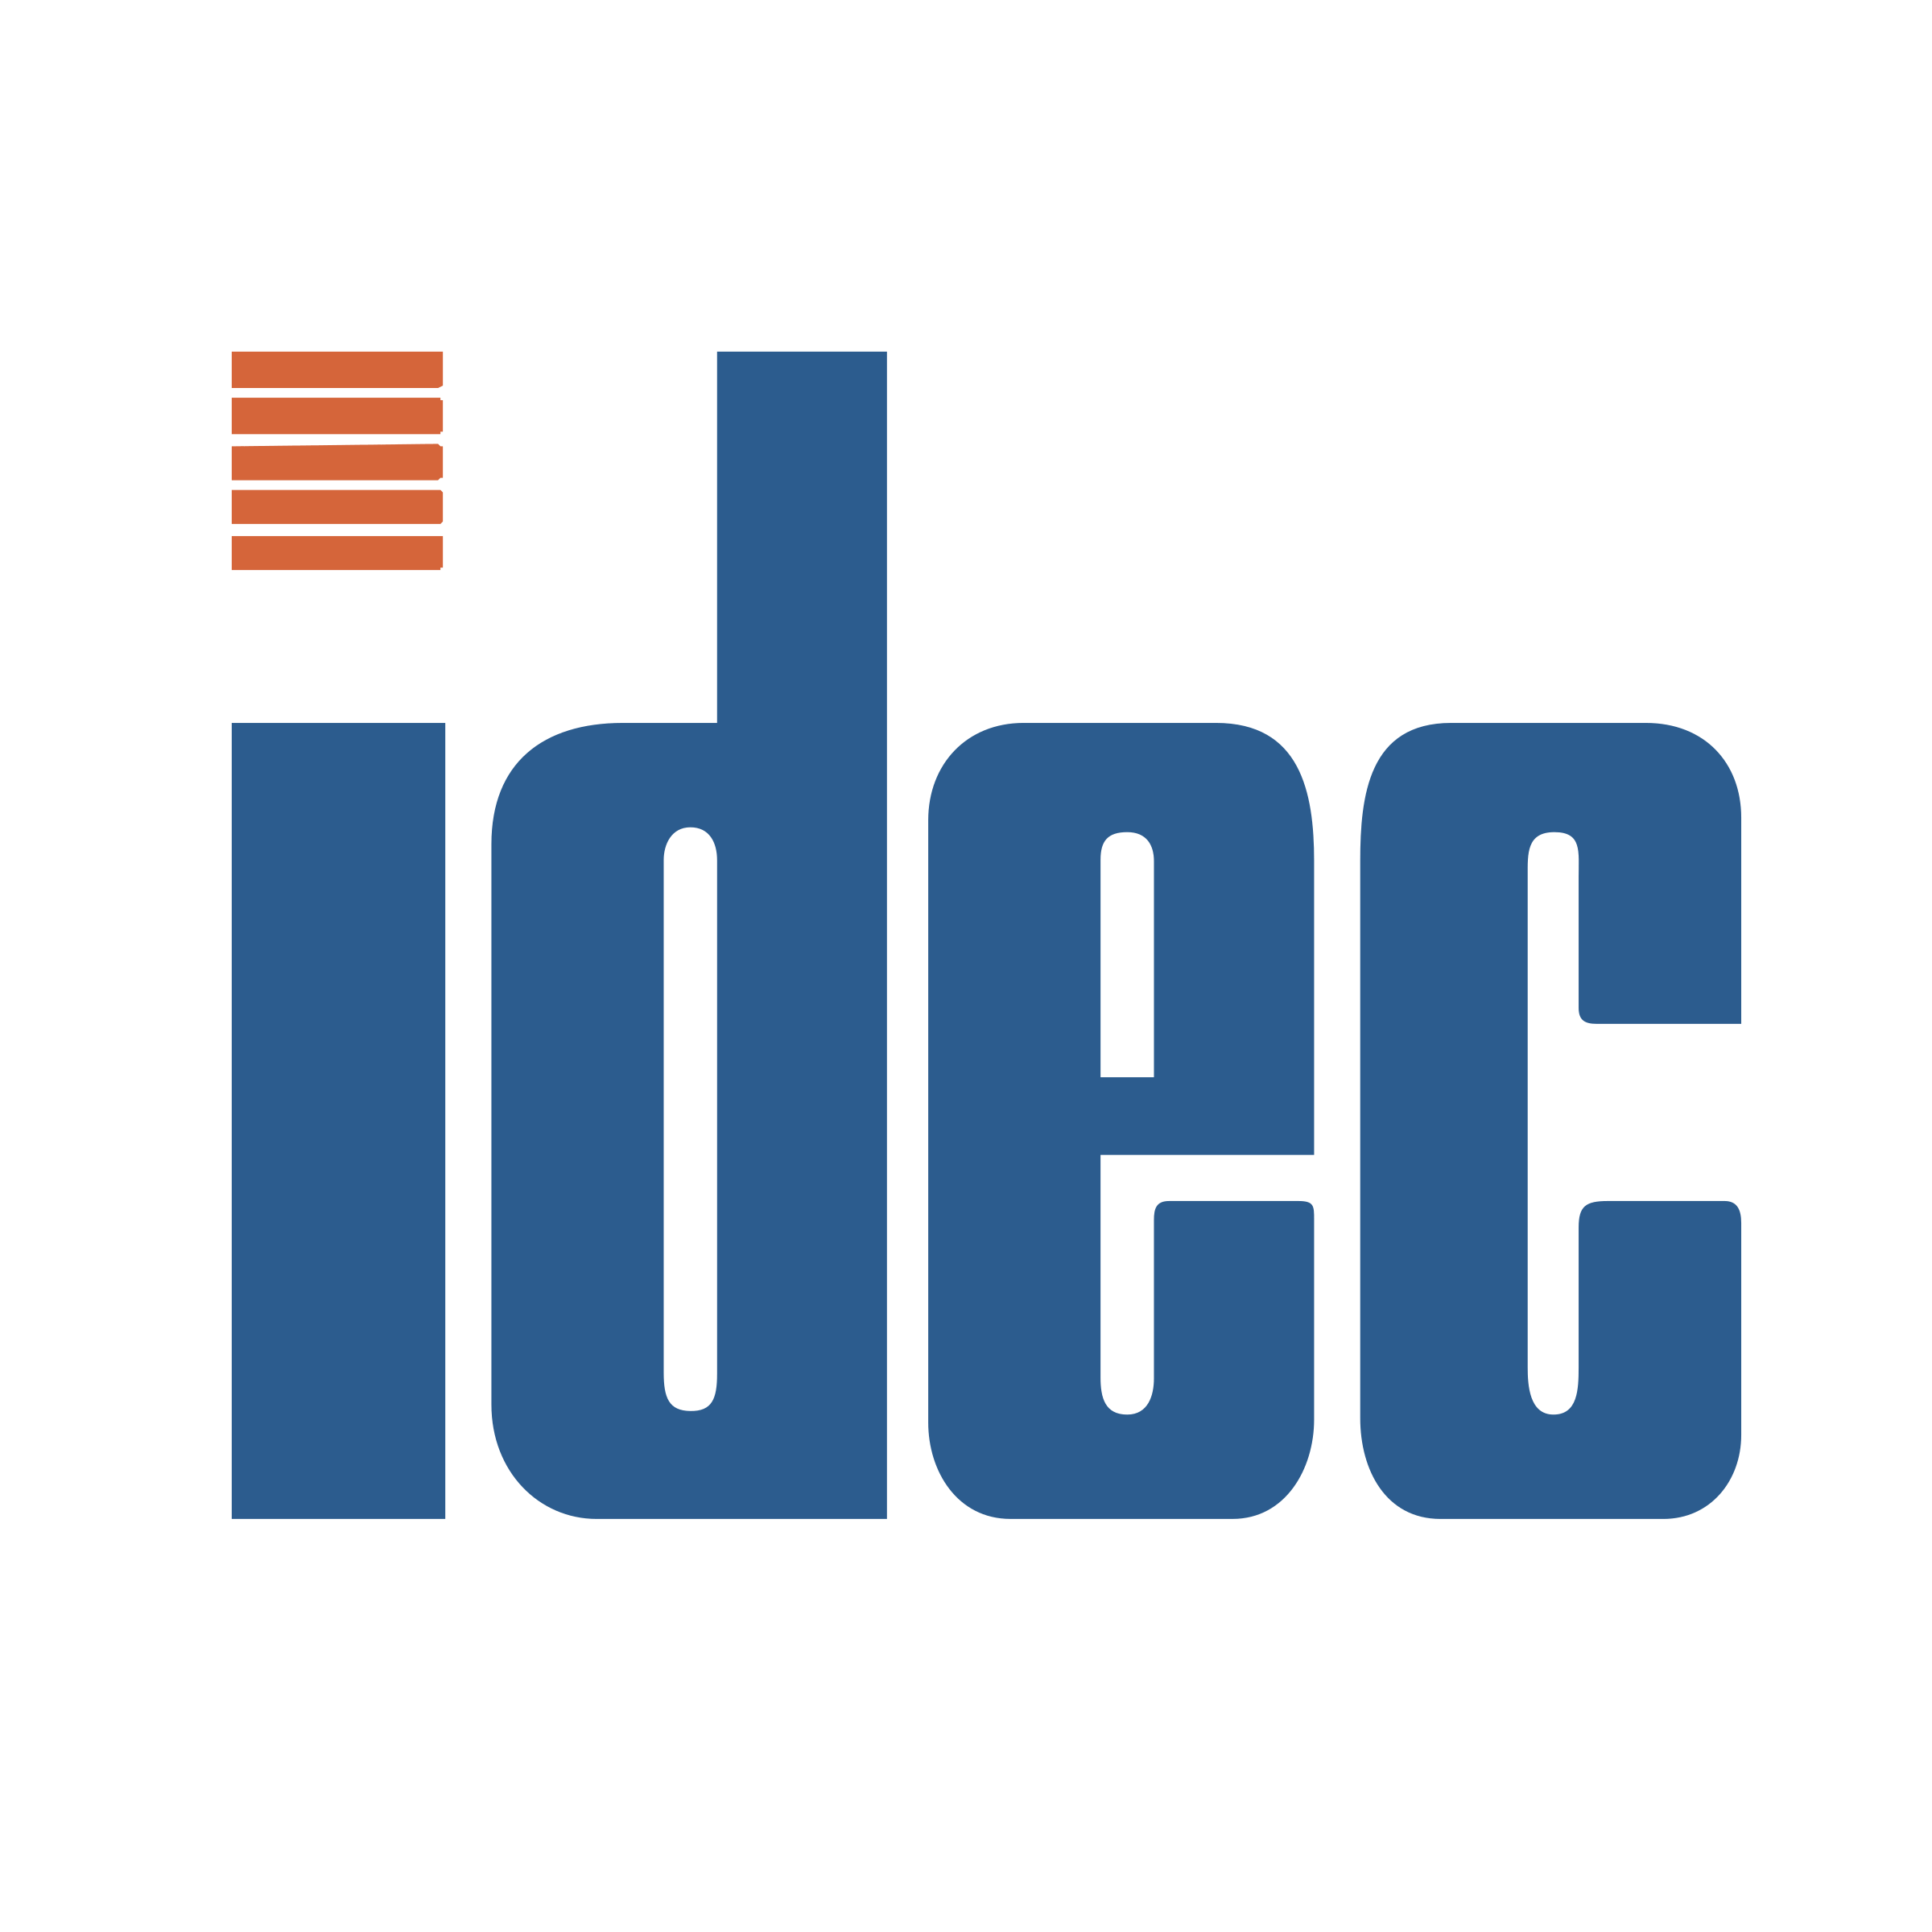 Idec Logo - Idec Logo PNG Transparent & SVG Vector - Freebie Supply